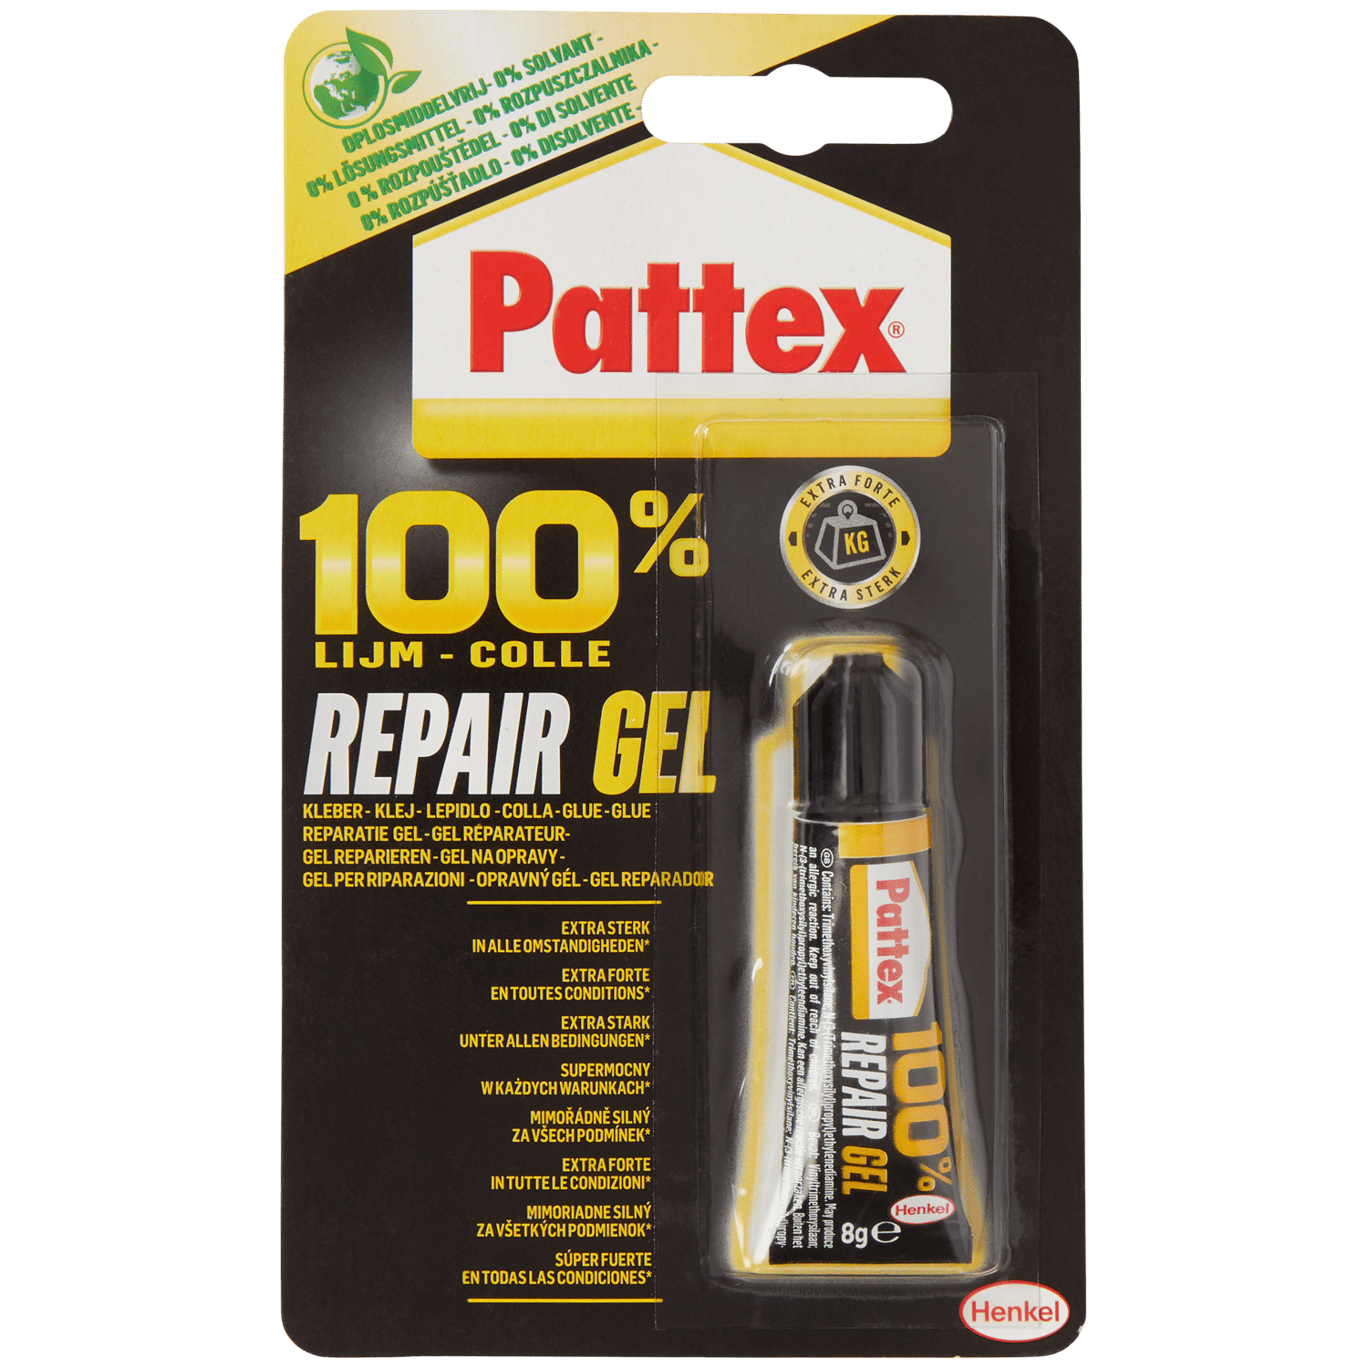 Strippen neus Ook Pattex 100% repair gel-lijm | Action.com